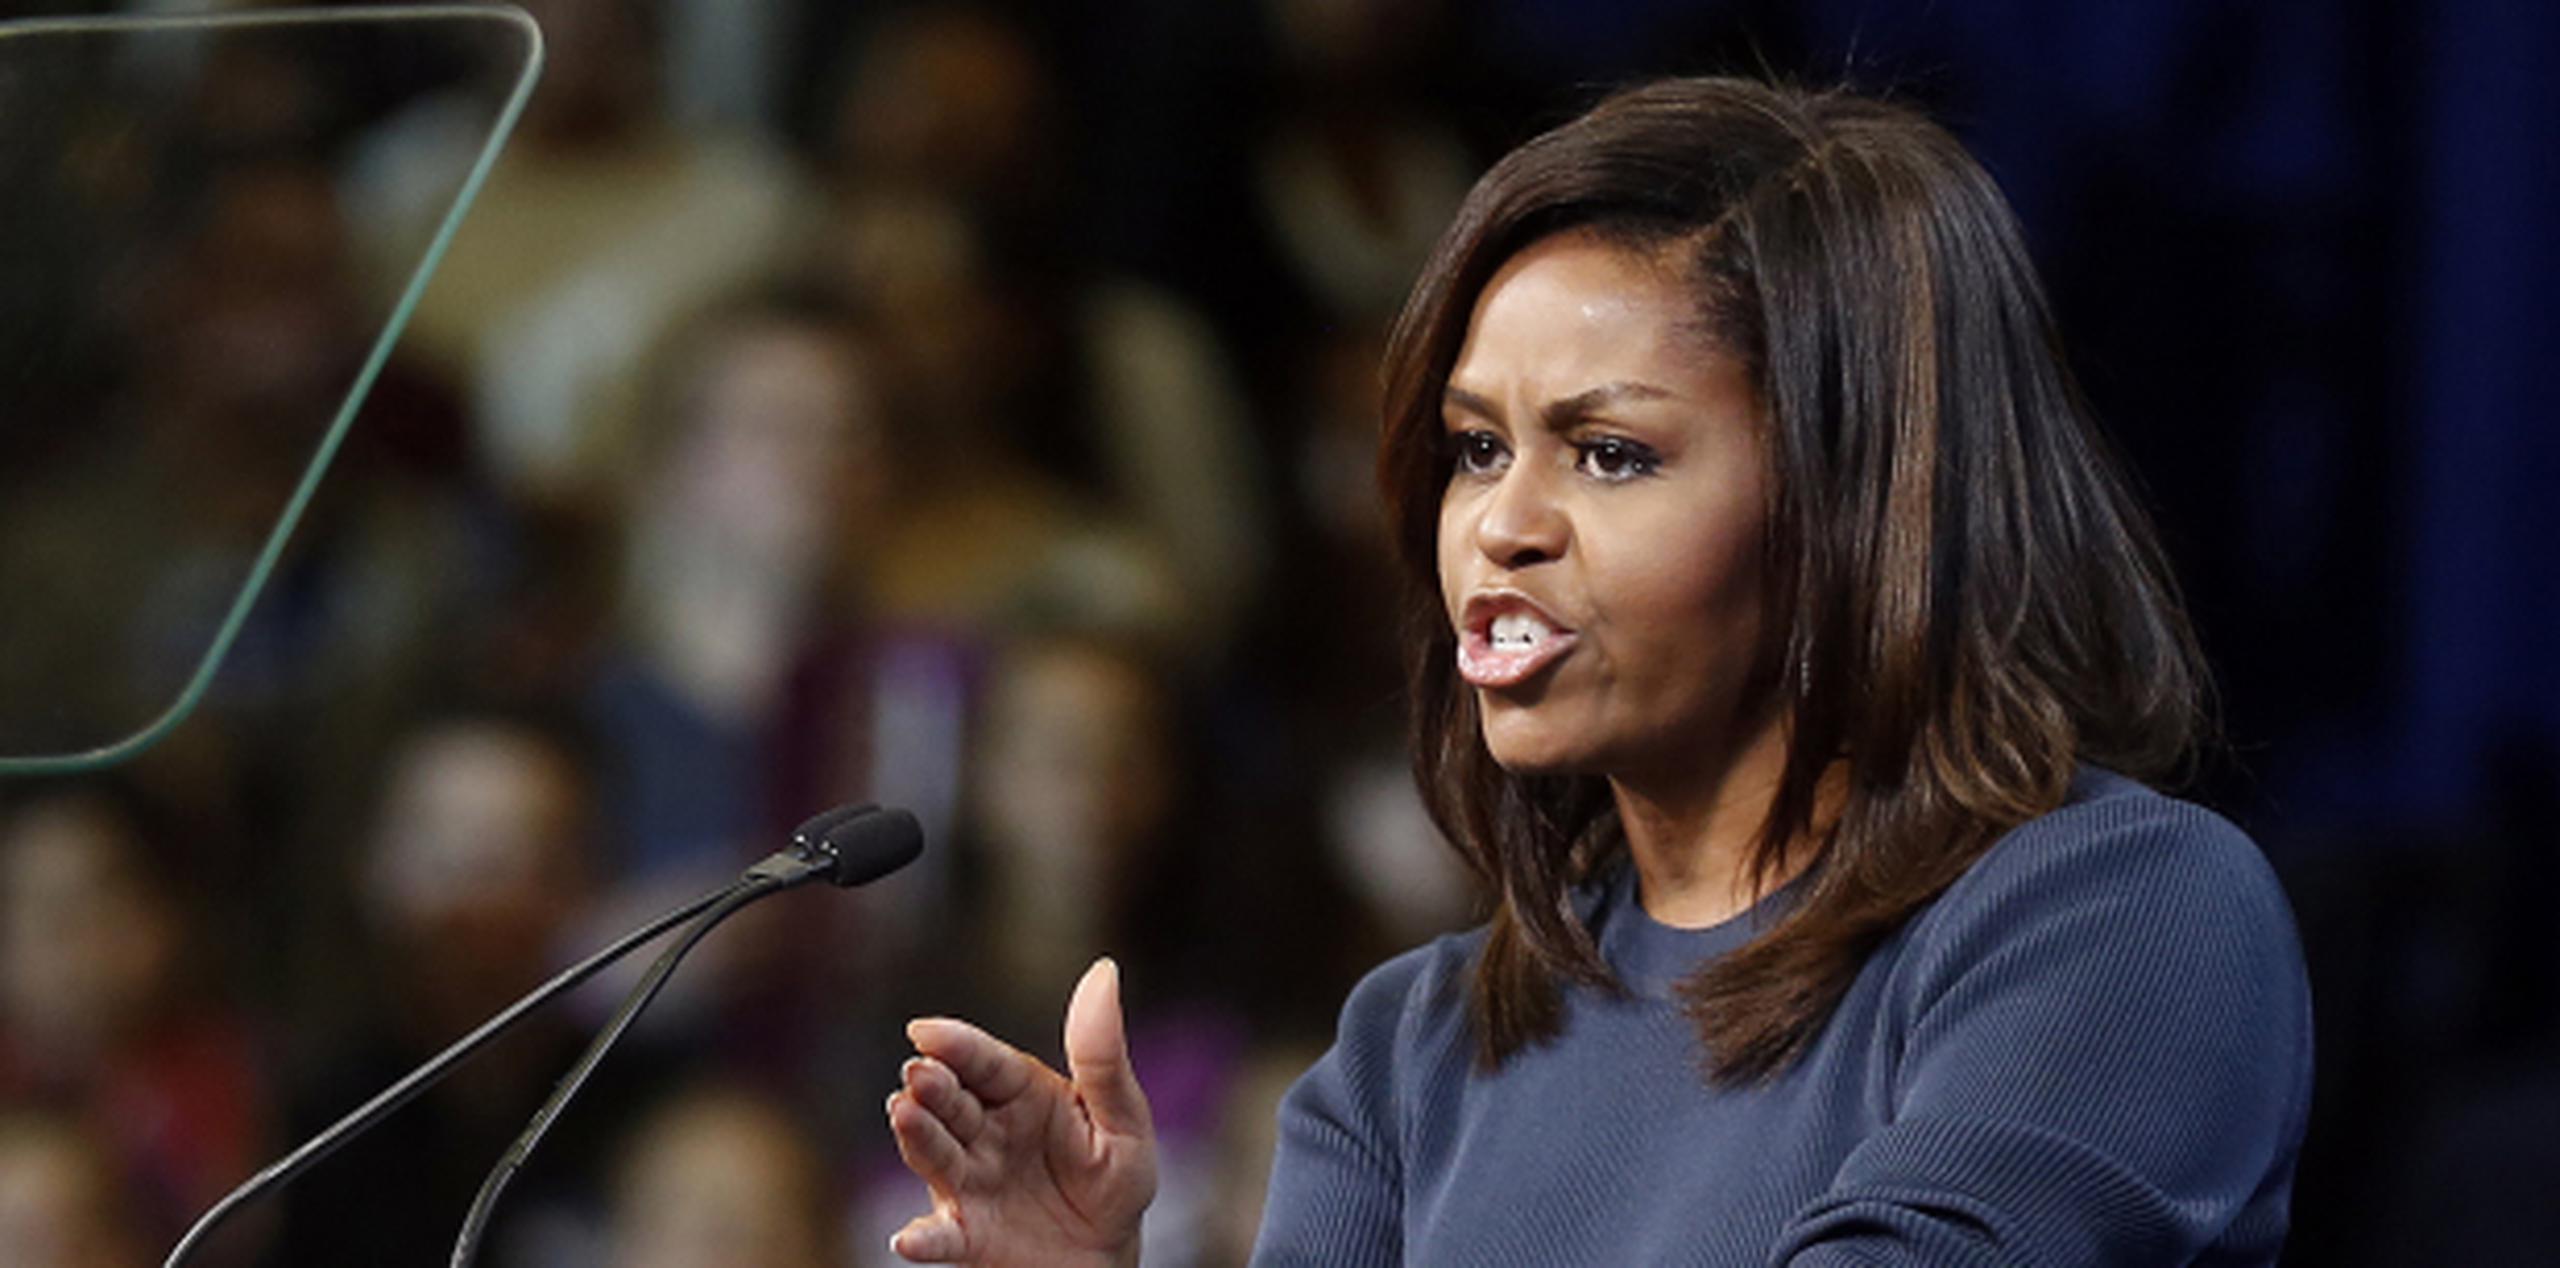 "Ninguna mujer merece ser tratada así", enfatizó Obama. (AP / Jim Cole)